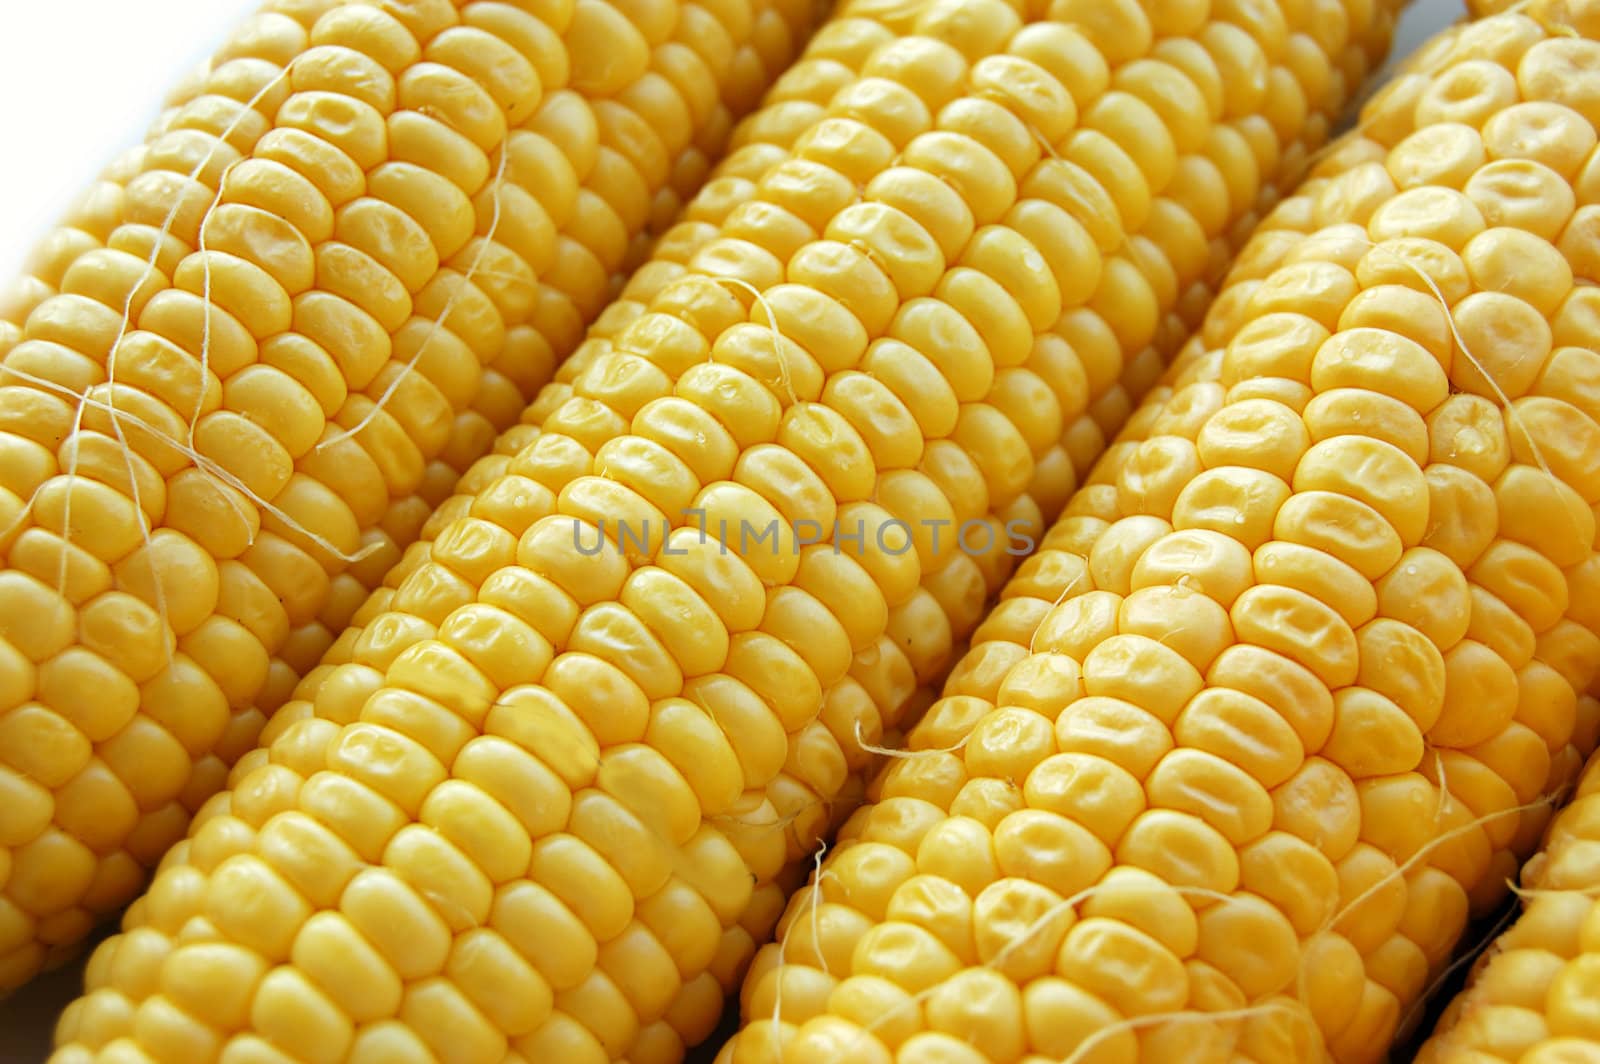 Ears of fresh corn as background